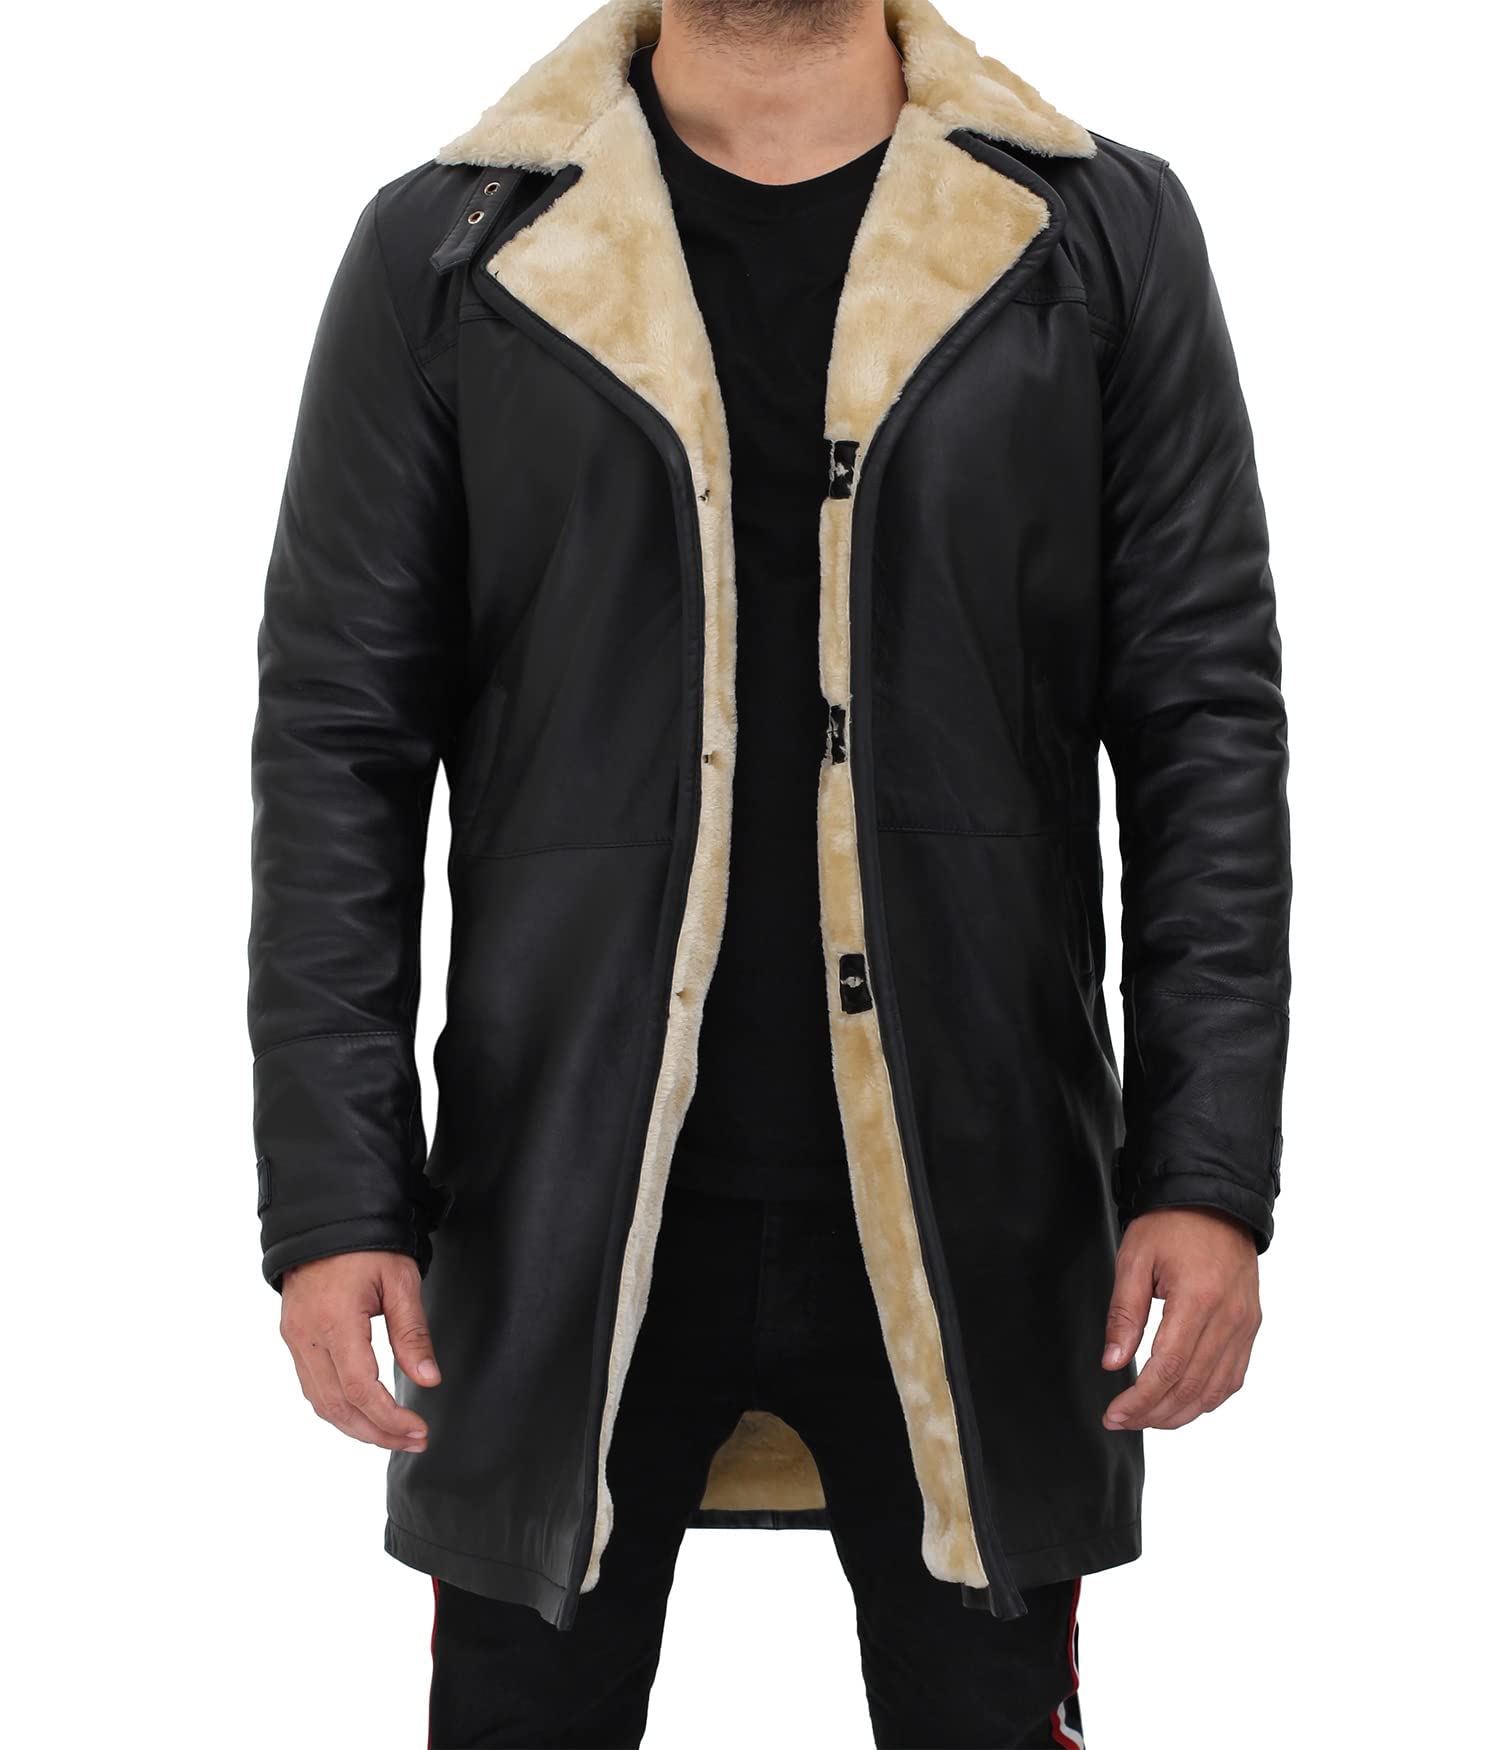 Blingsoul Black Trench Coat Men - Brown Winter Shearling Leather Jackets for Men